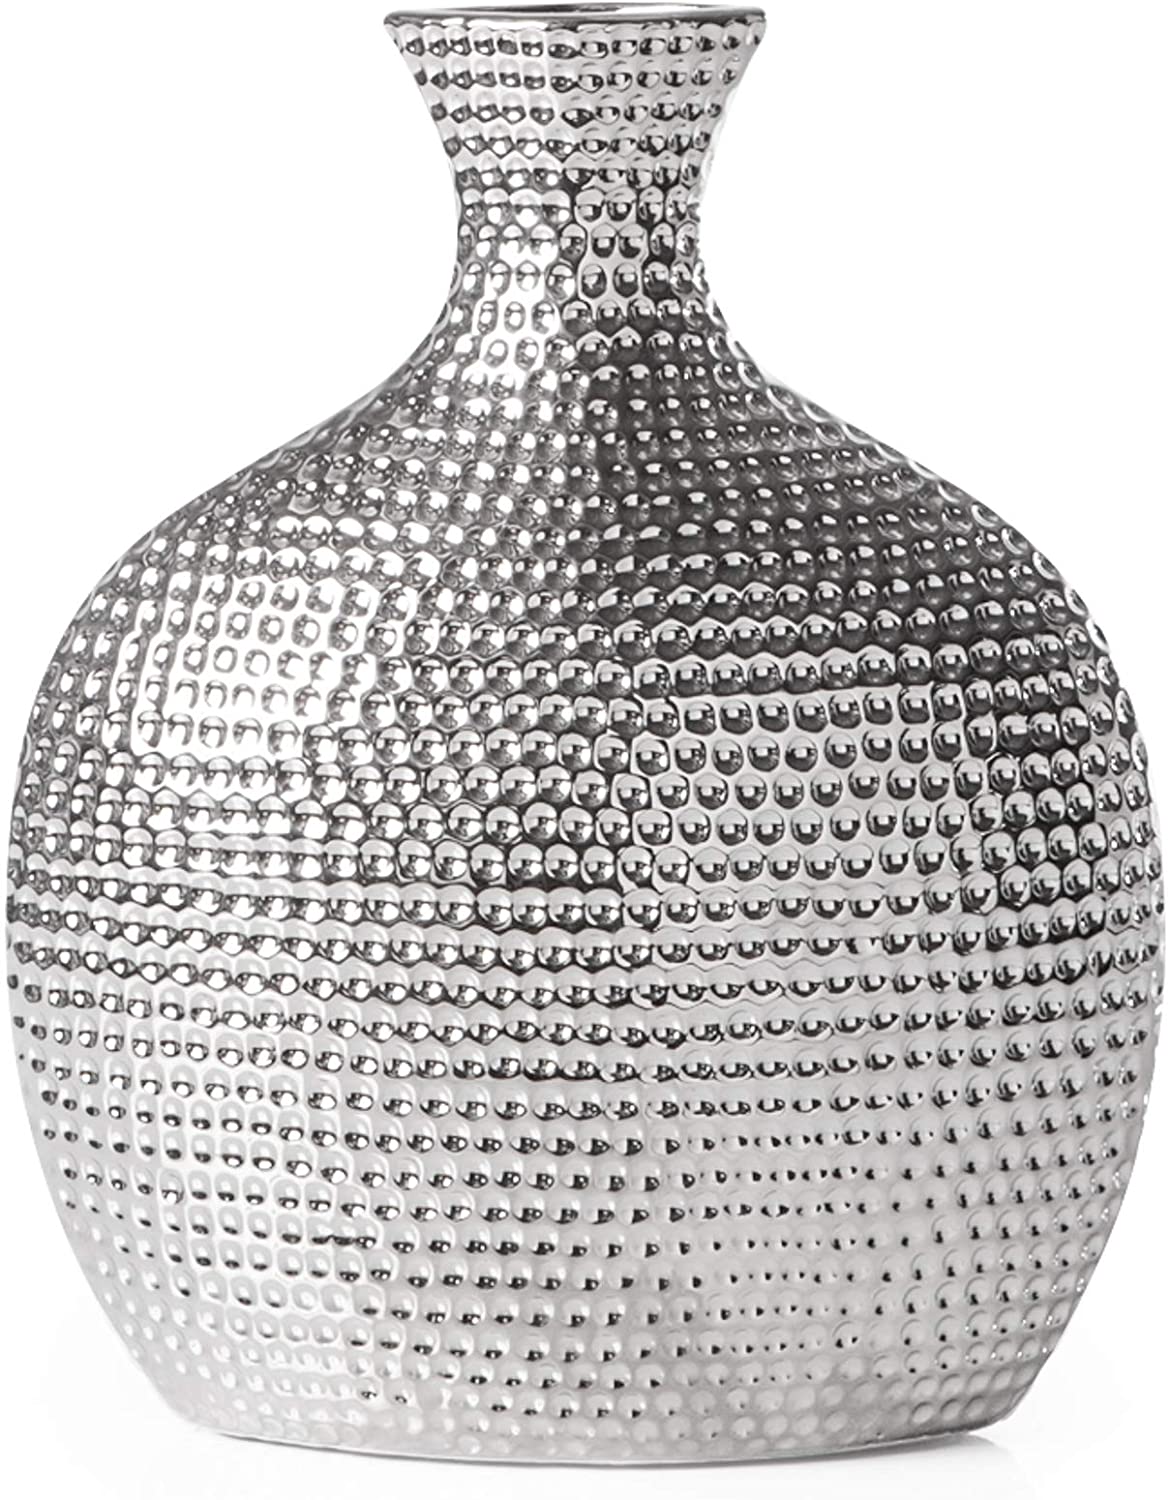 Torre & Tagus Helio Hammered Ceramic Bottle Vase